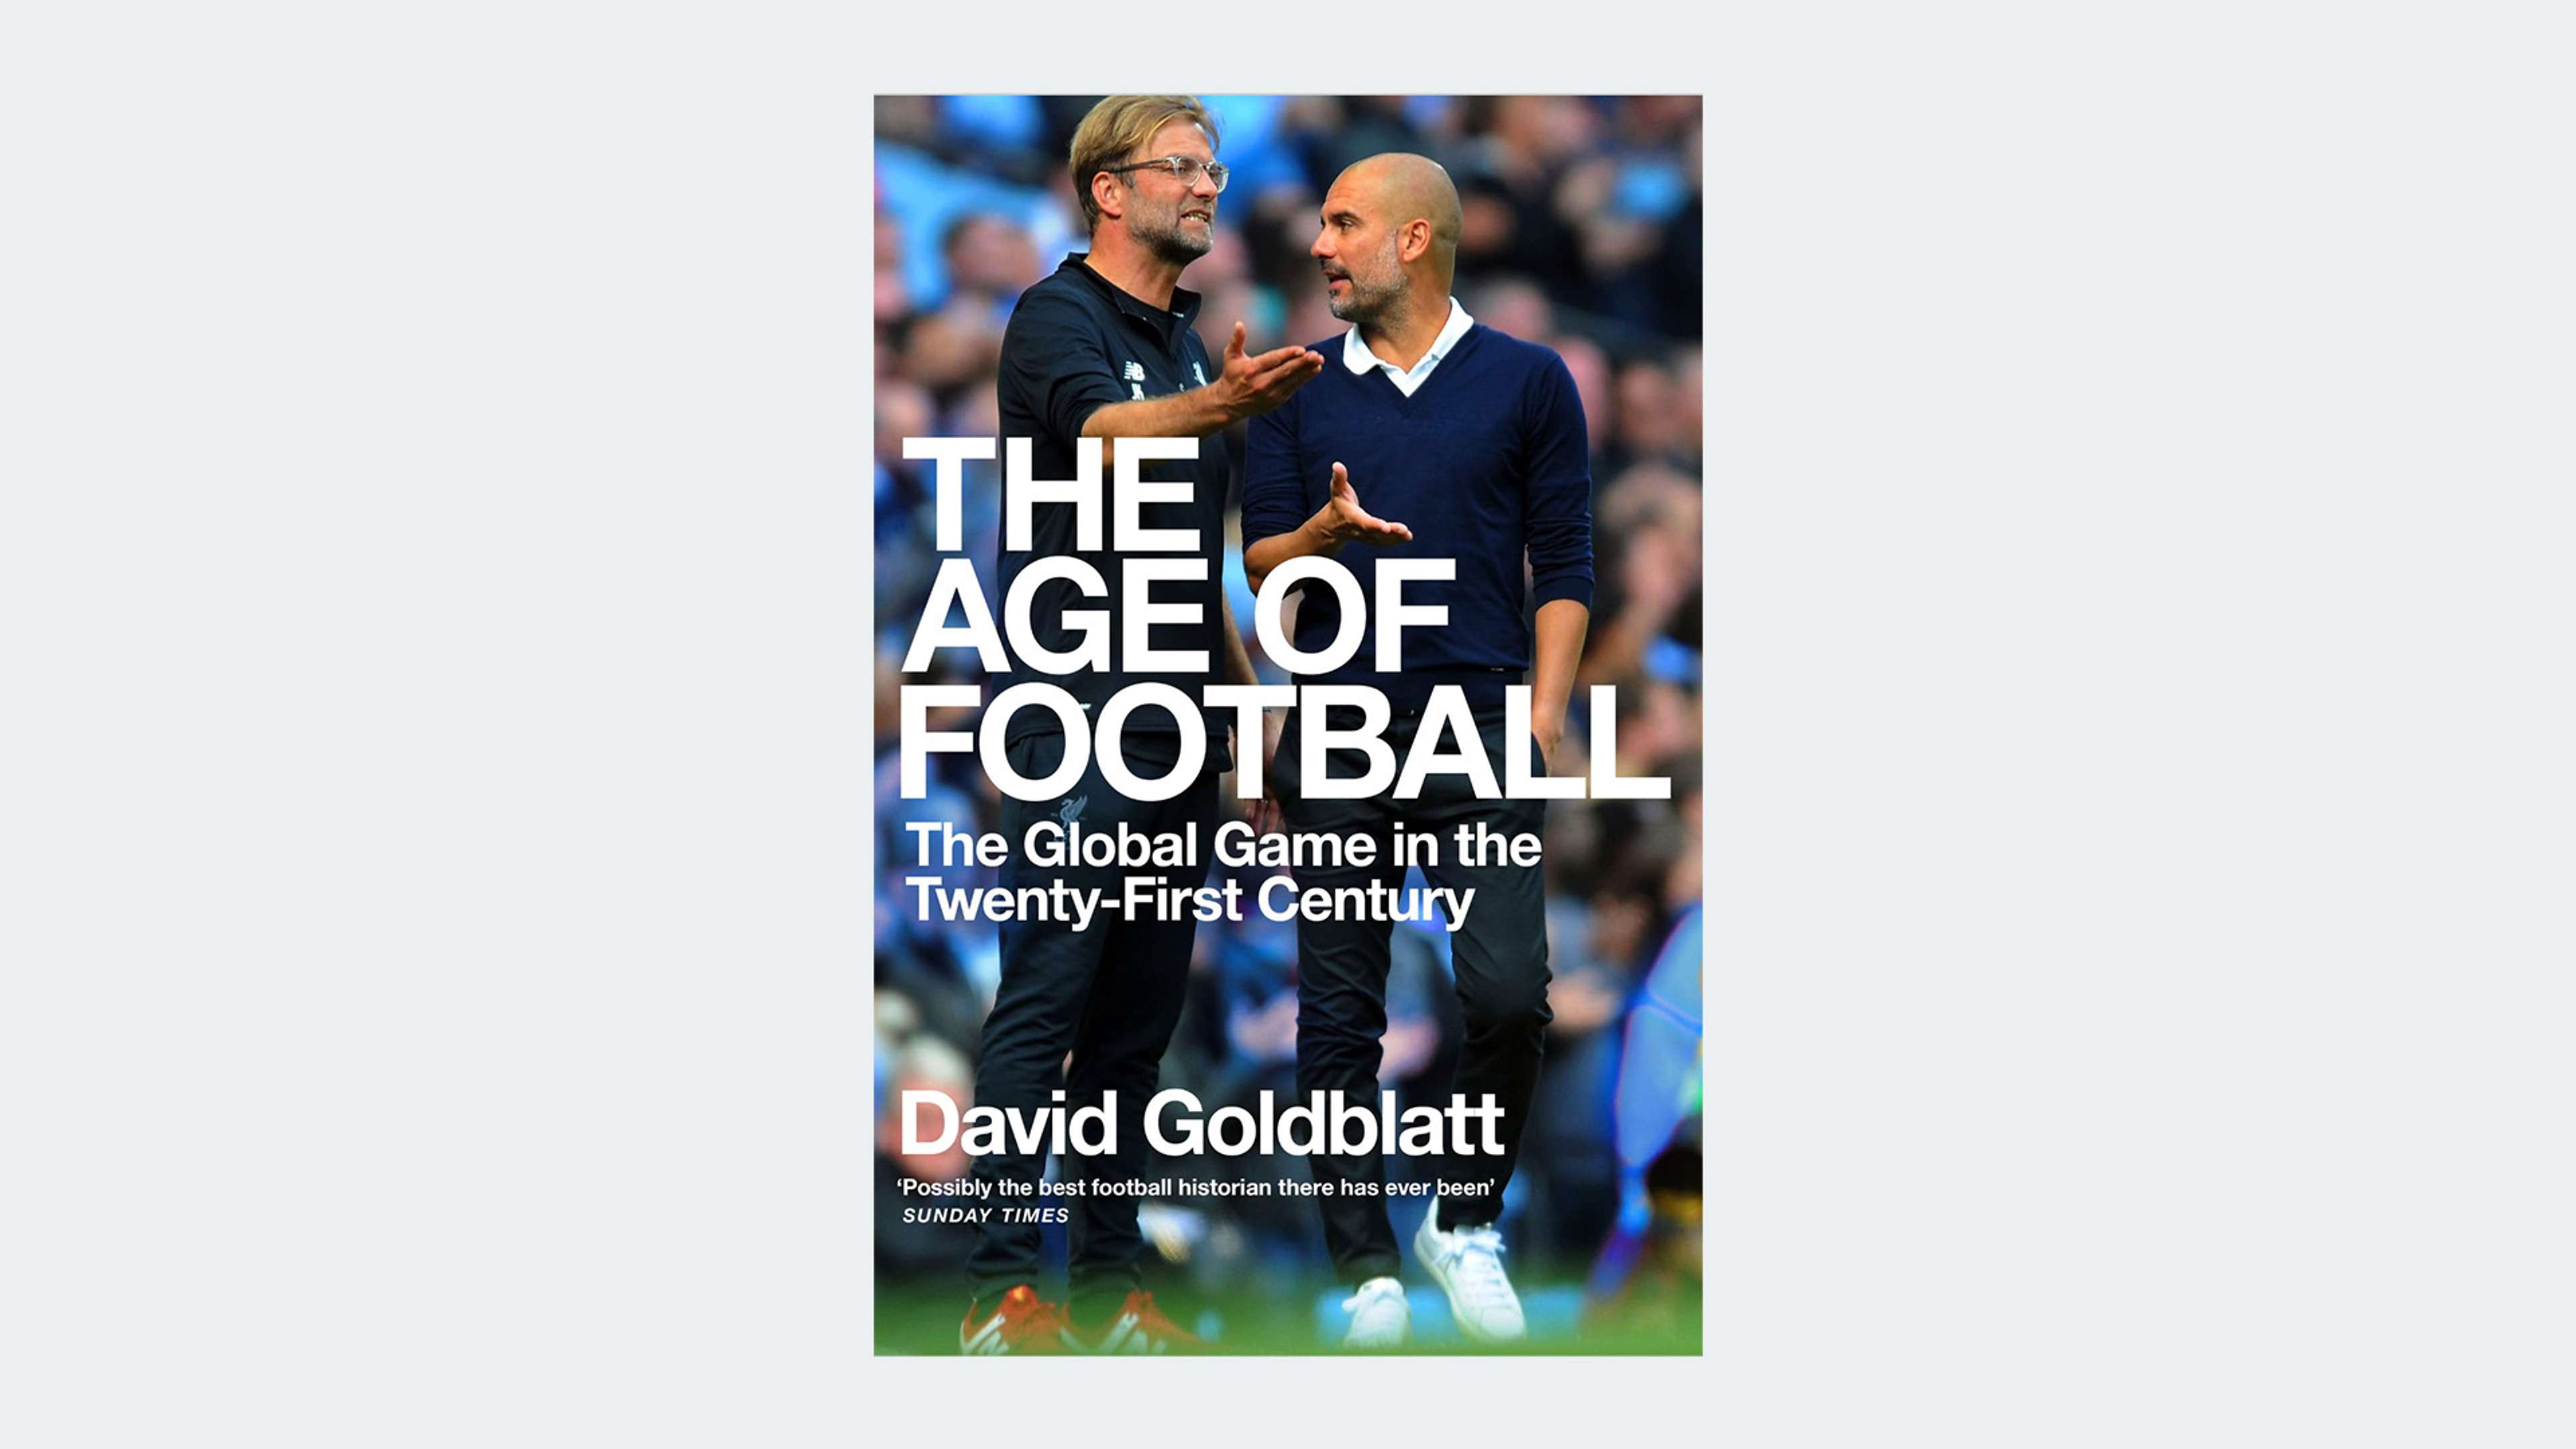 The Age of Football by David Goldblatt